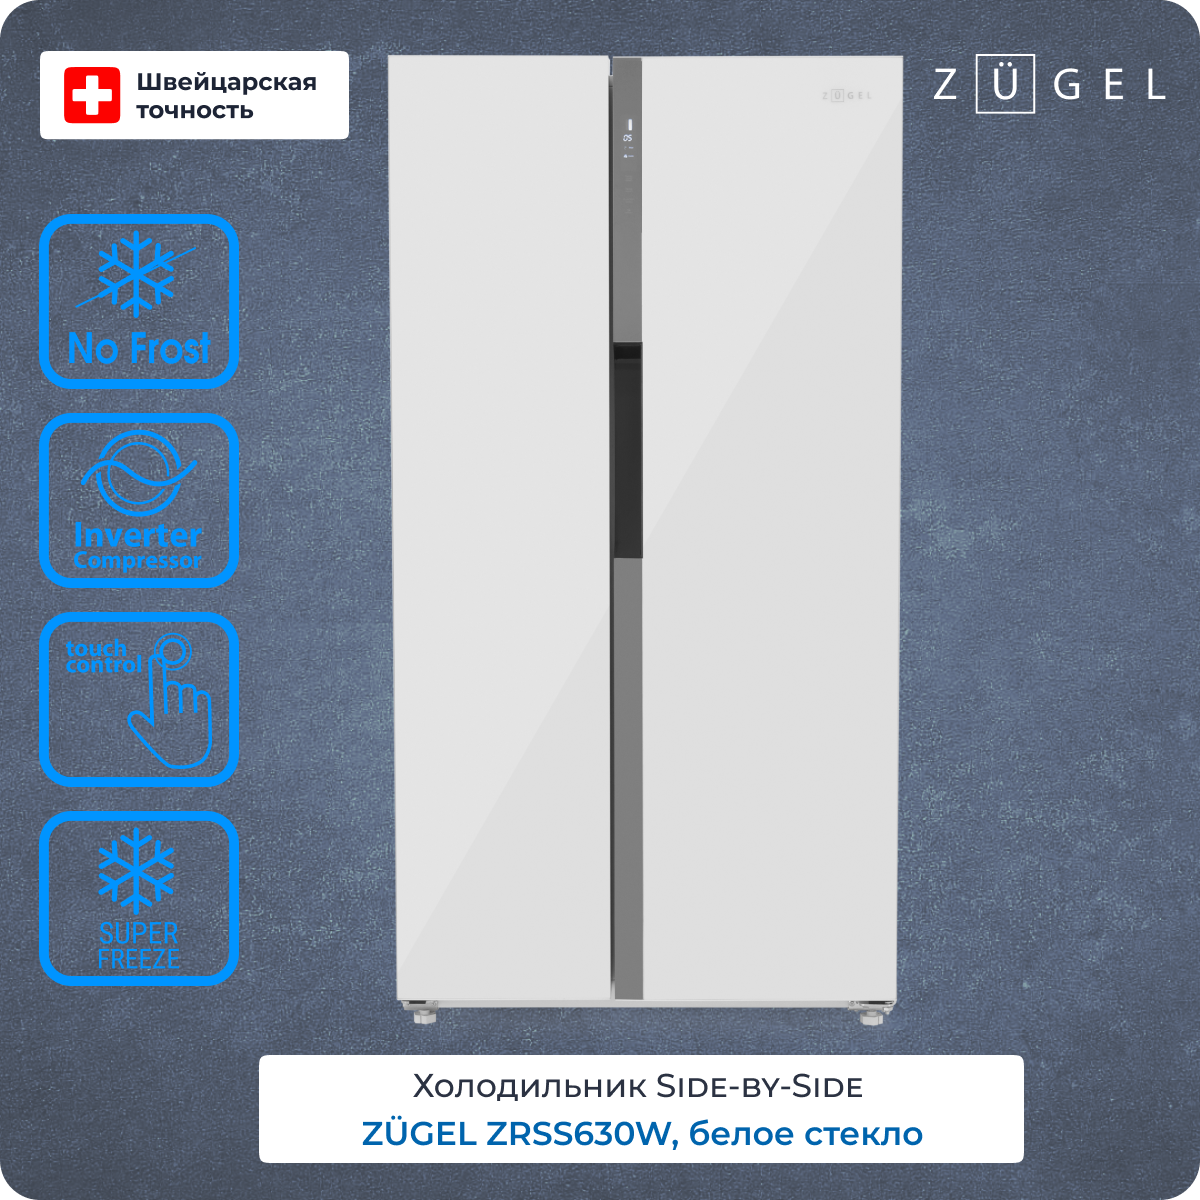 Холодильник ZUGEL ZRSS630W белый принципы и практика интуитивного питания триболи э реш э